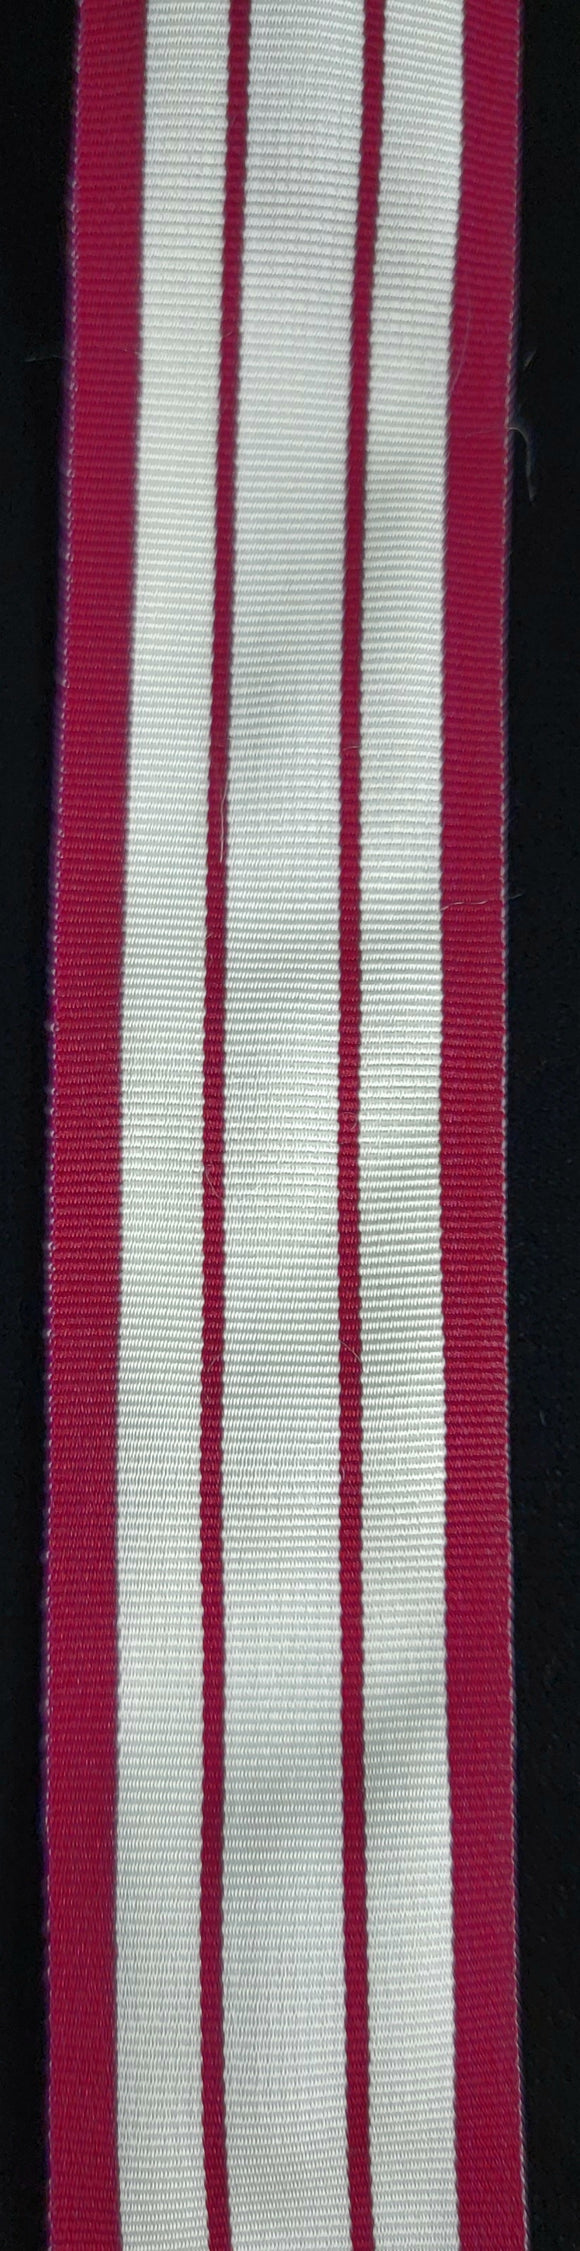 Ribbon, UK Naval General Service Medal (1915 NGSM)